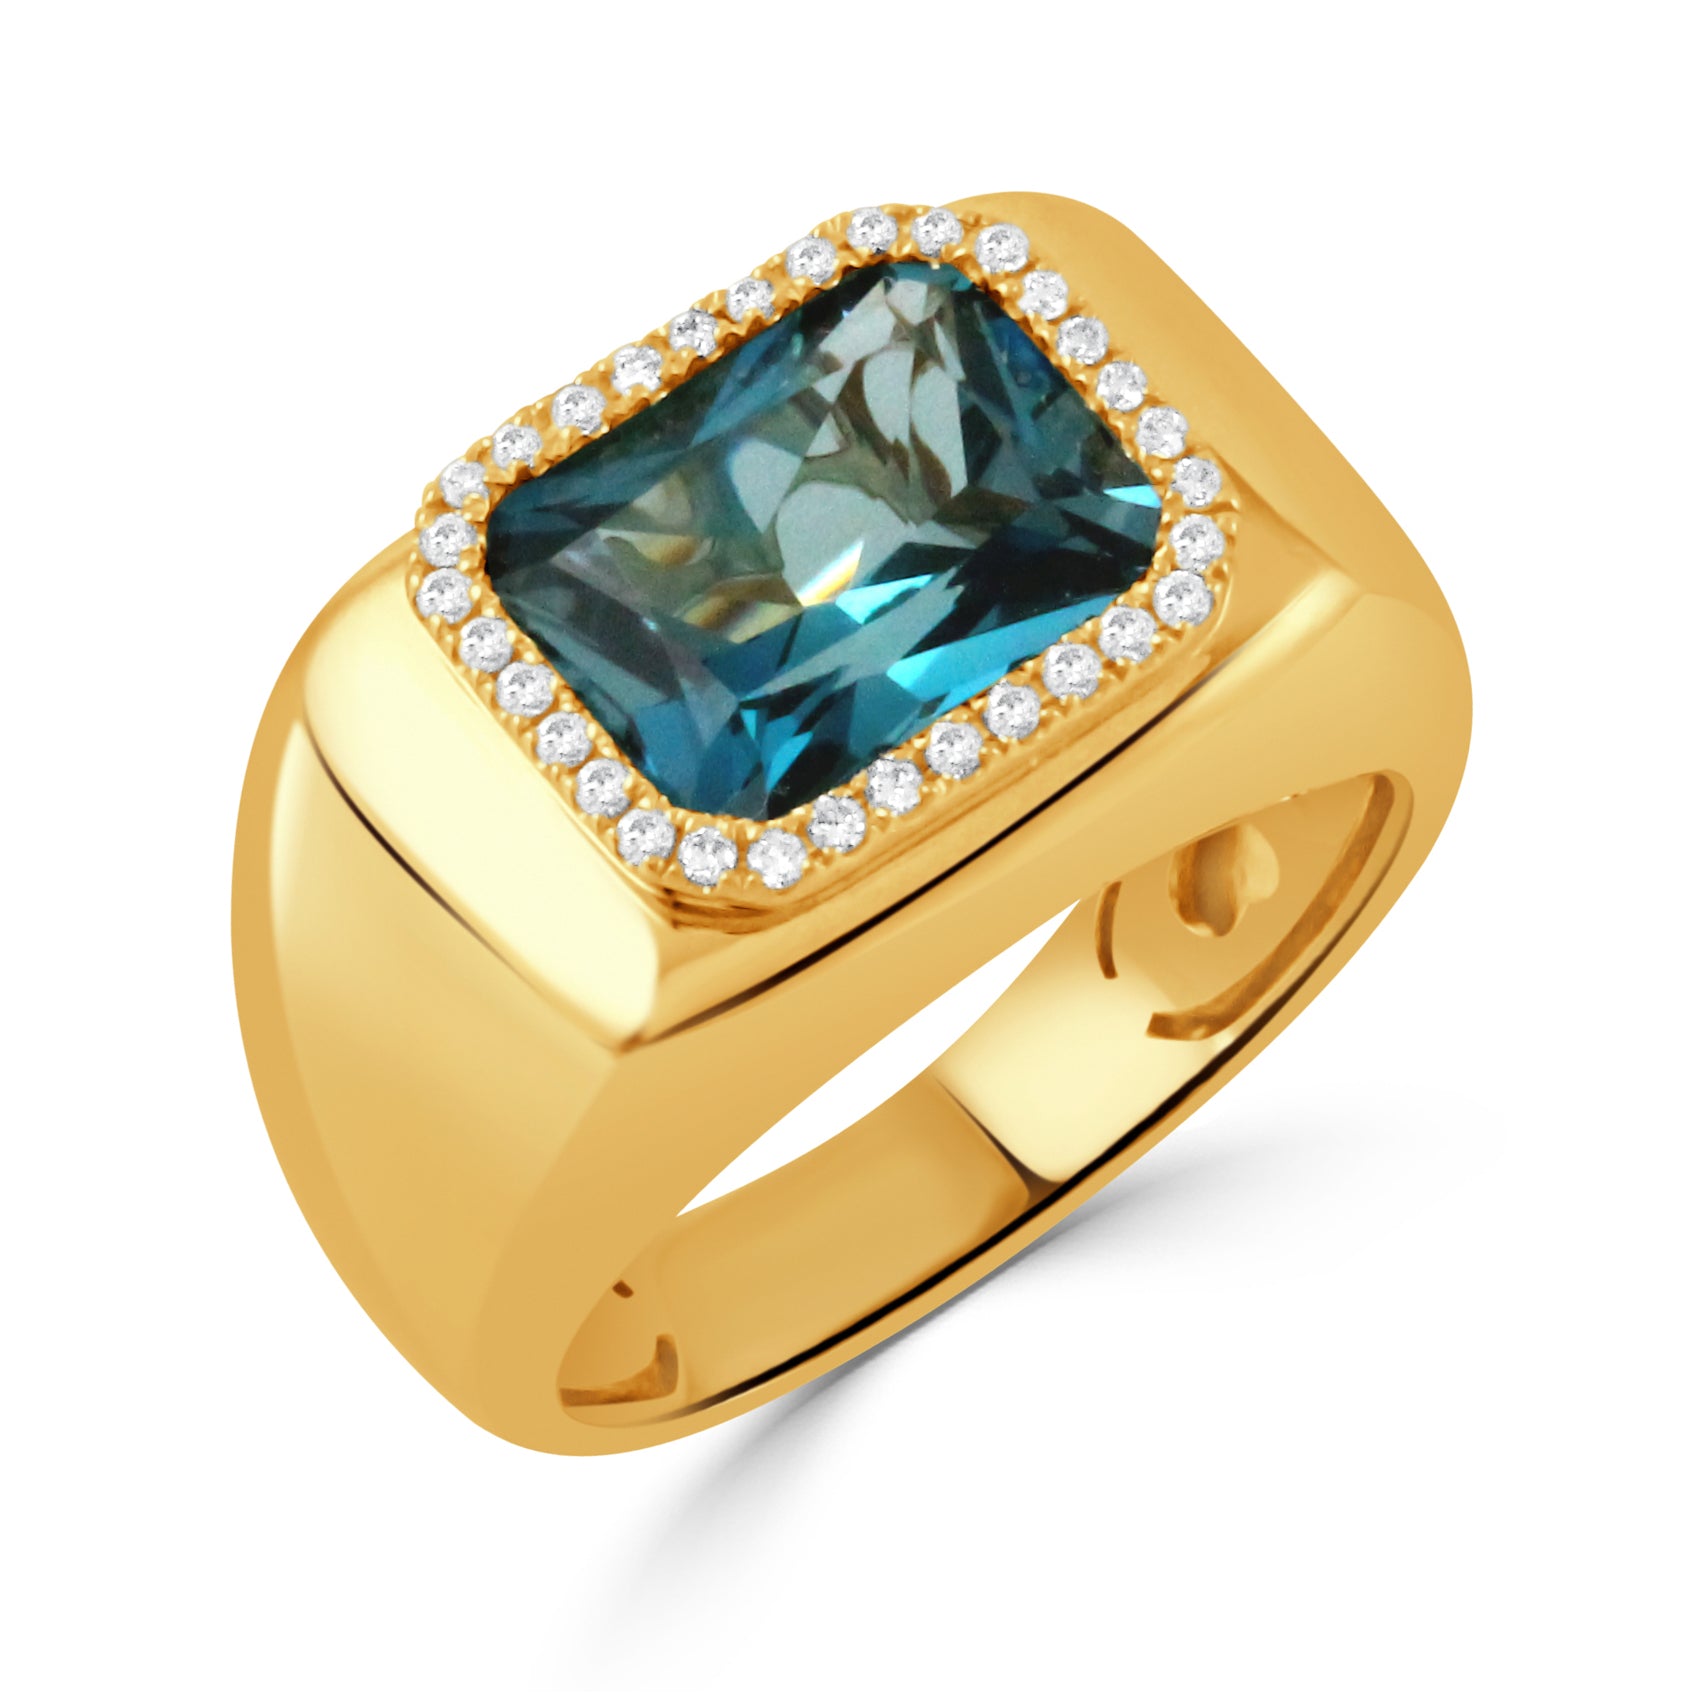 18K YELLOW GOLD DIAMOND RING WITH LONDON BLUE TOPAZ CENTER STONE